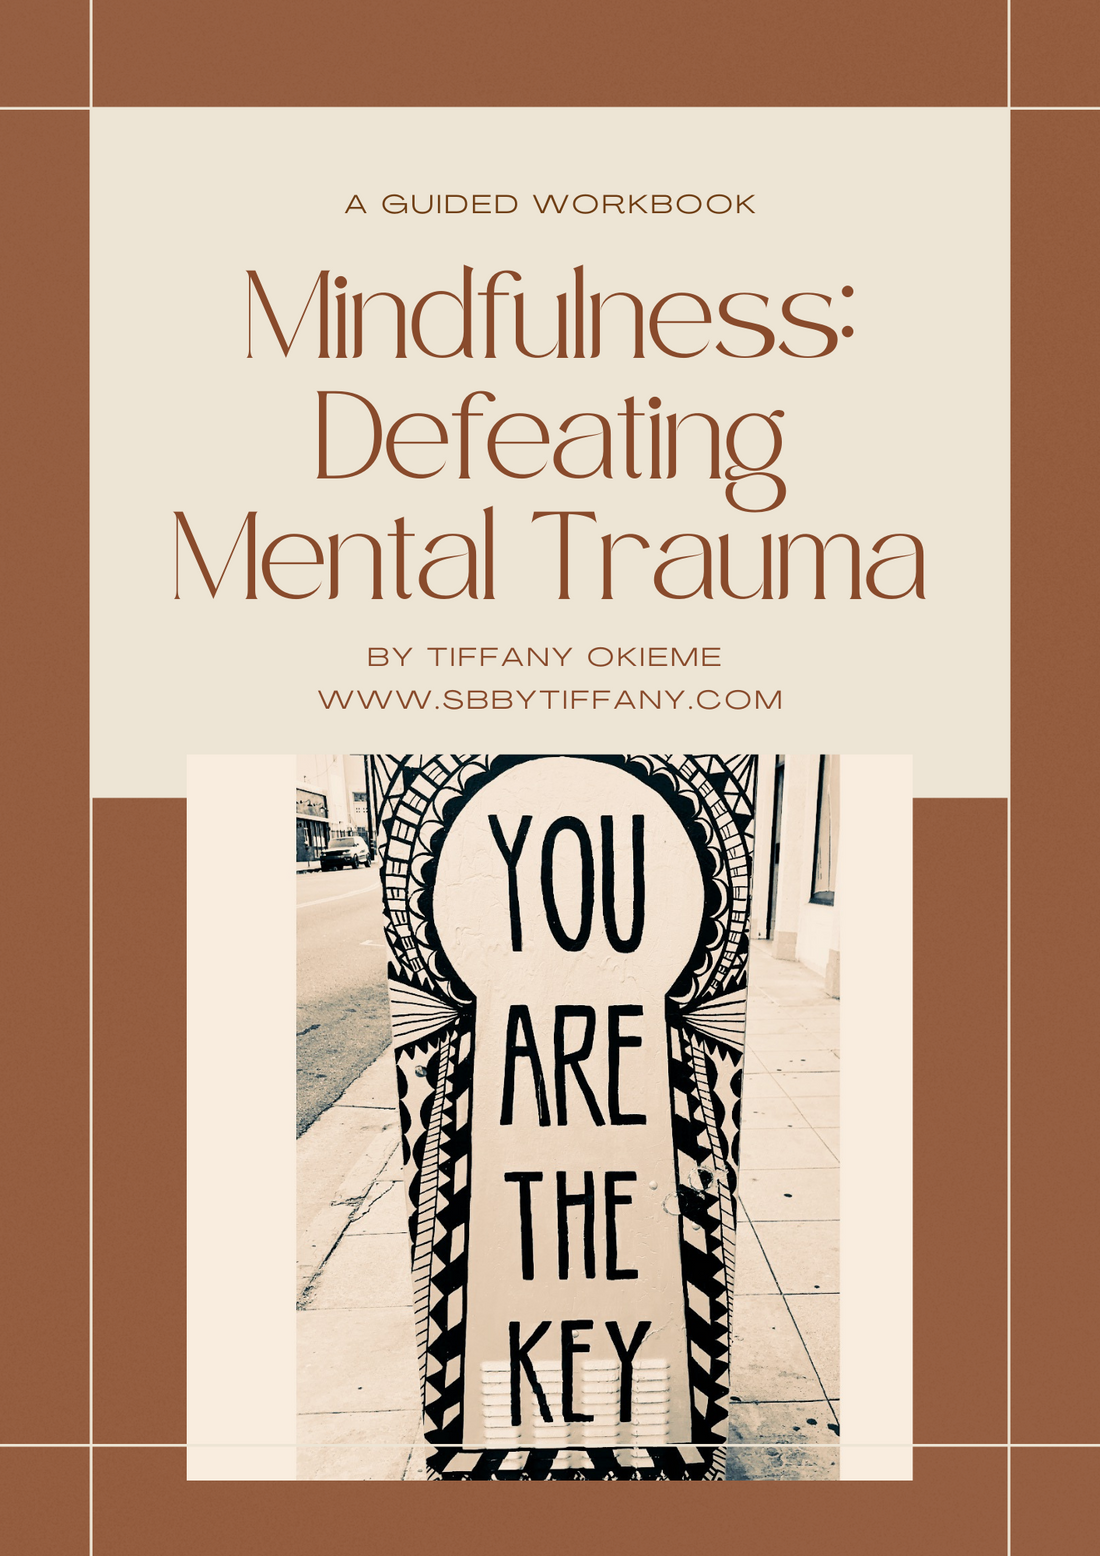 Mindfulness: Defeating Mental Trauma